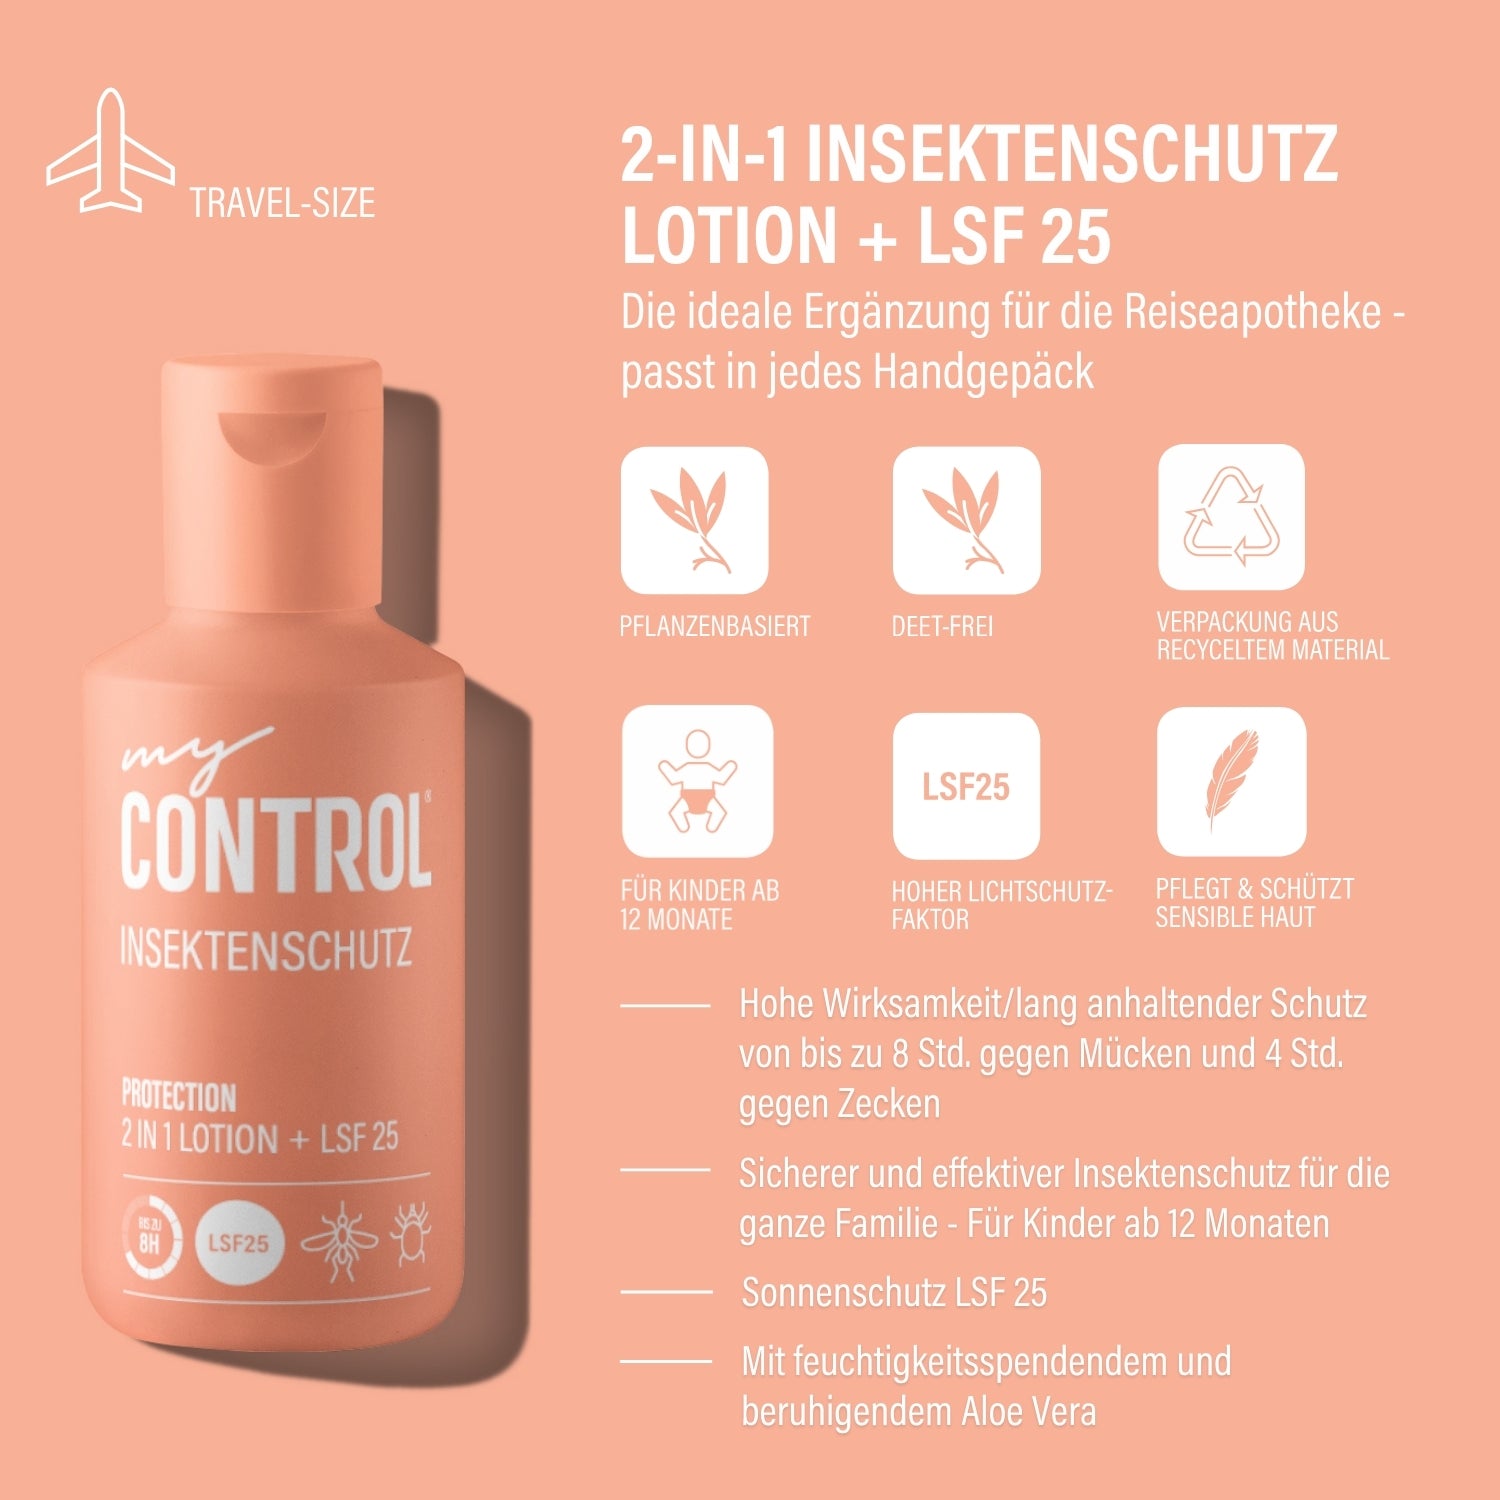 2-in-1 Insektenschutz Lotion +LSF 25